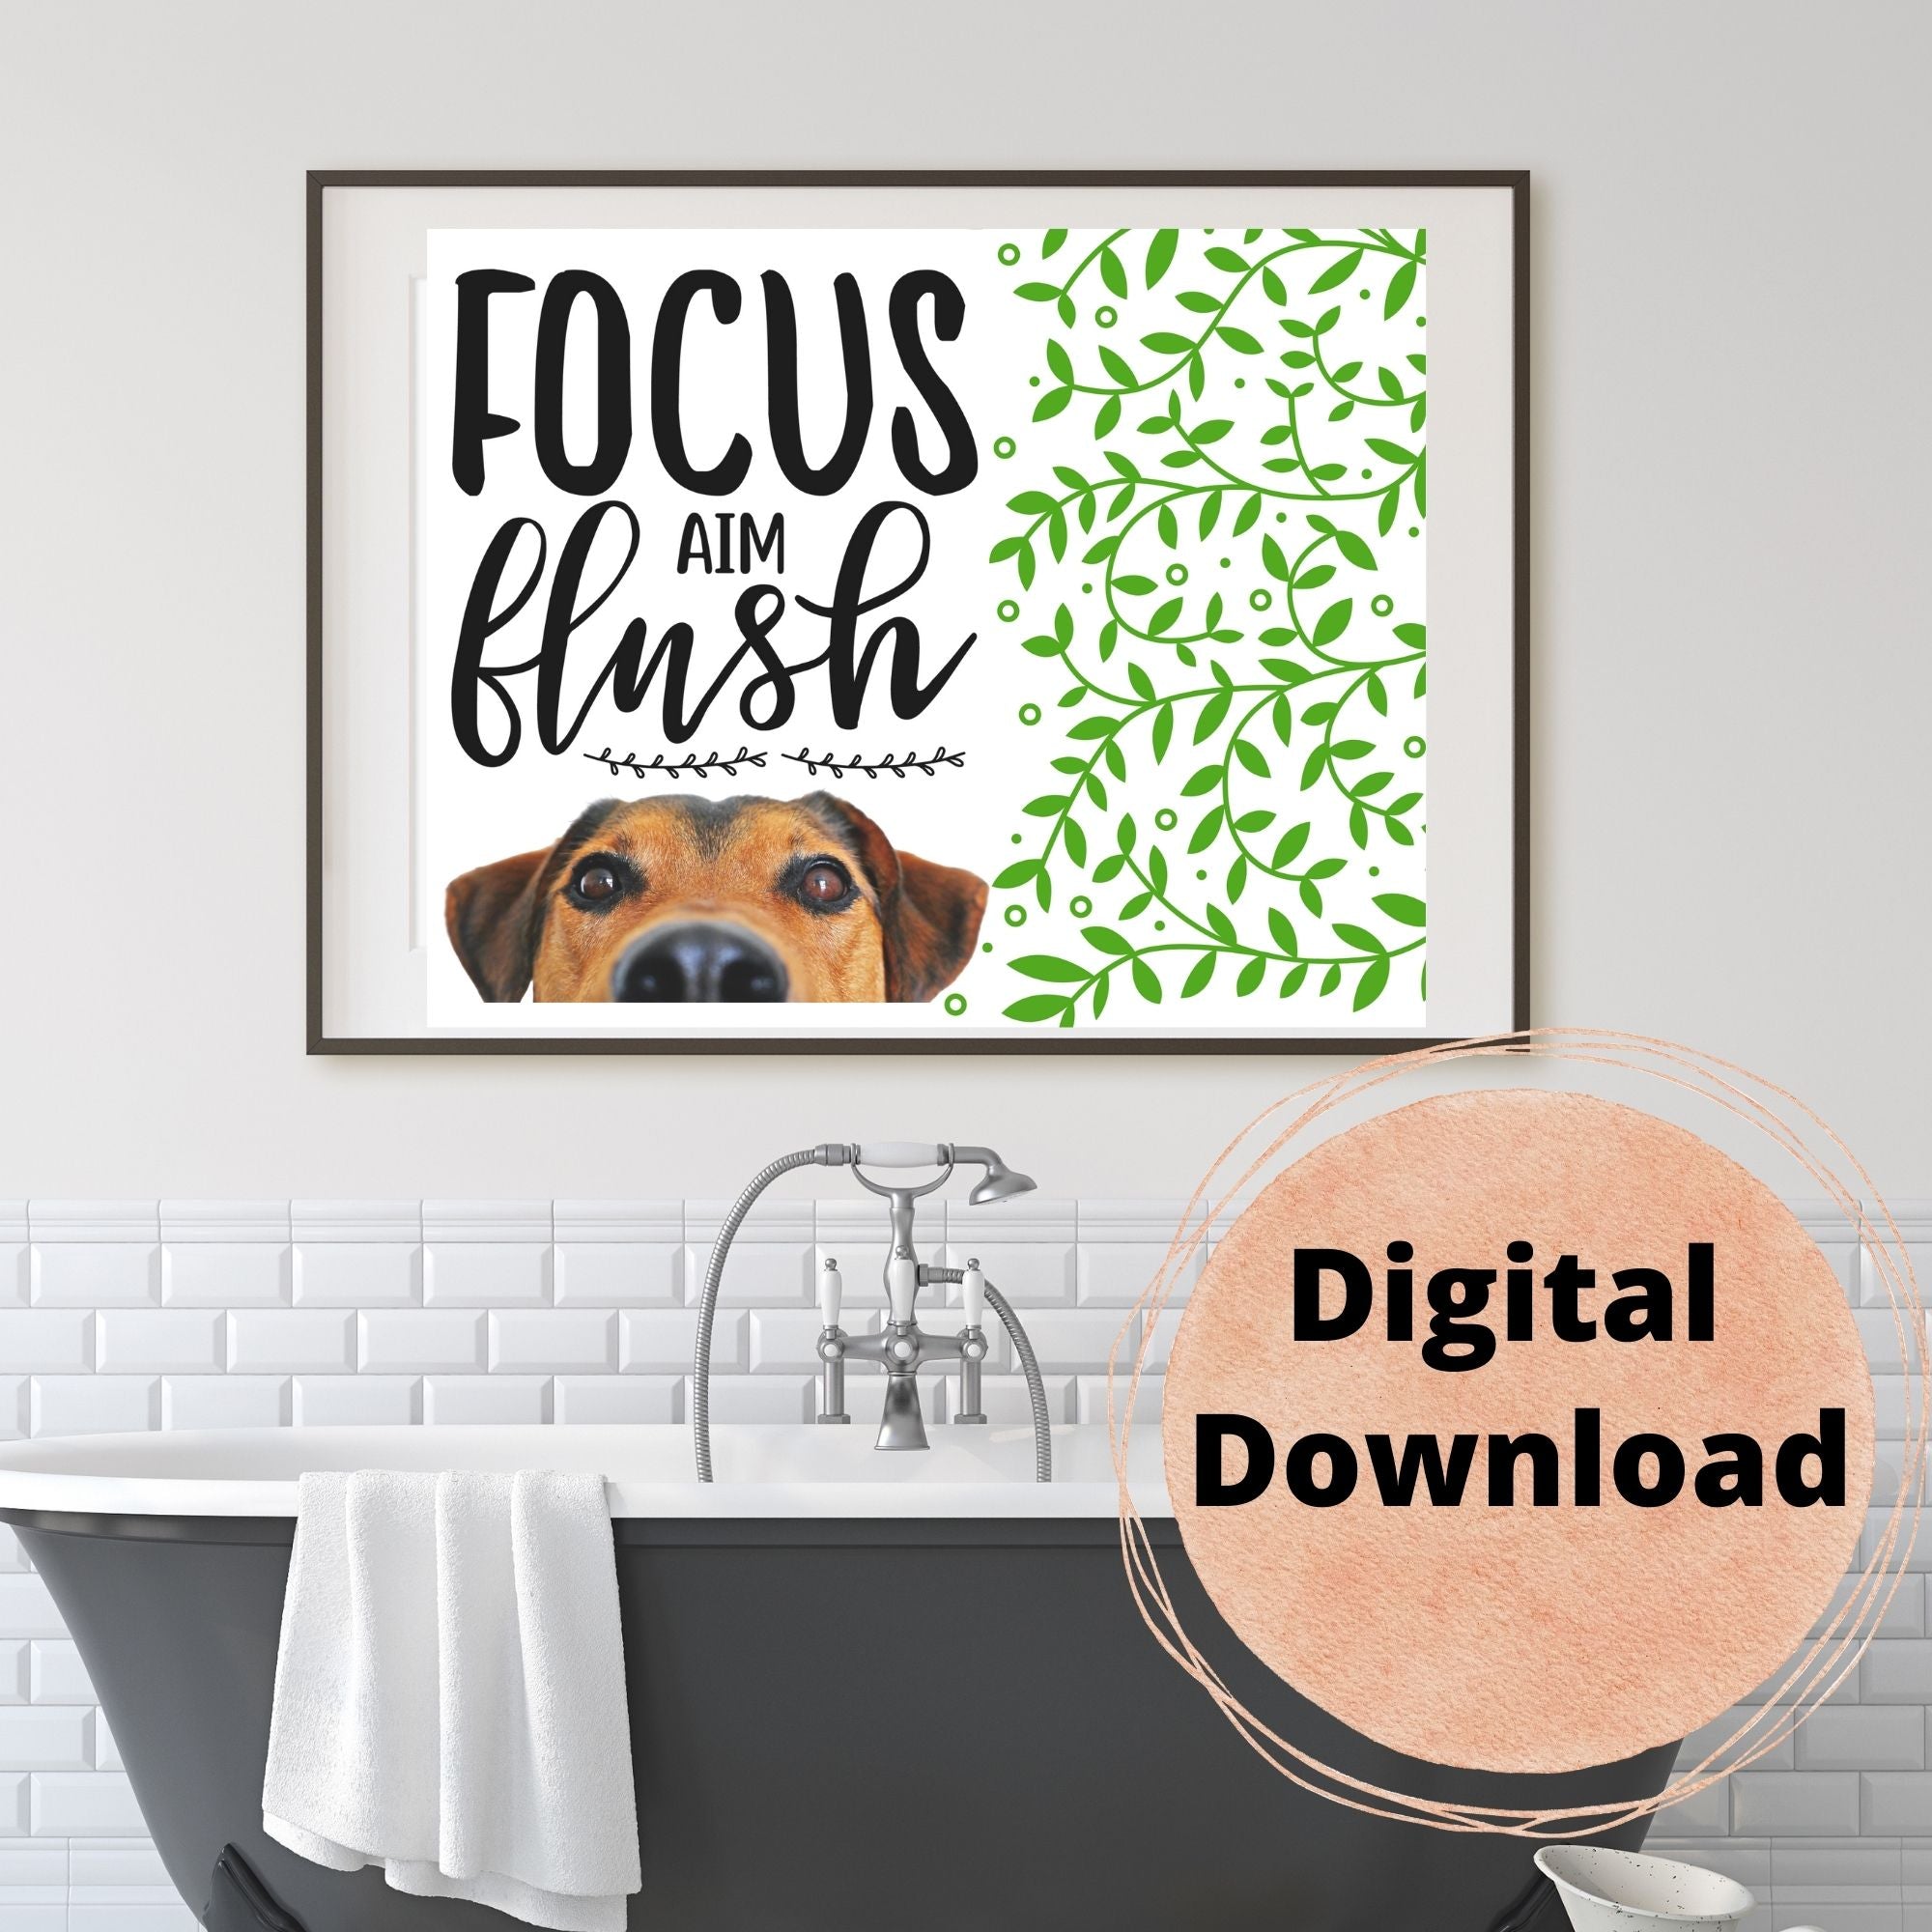 Funny Bathroom Humor with Dog "Focus Aim Flush" Digital Download Printable Wall Art